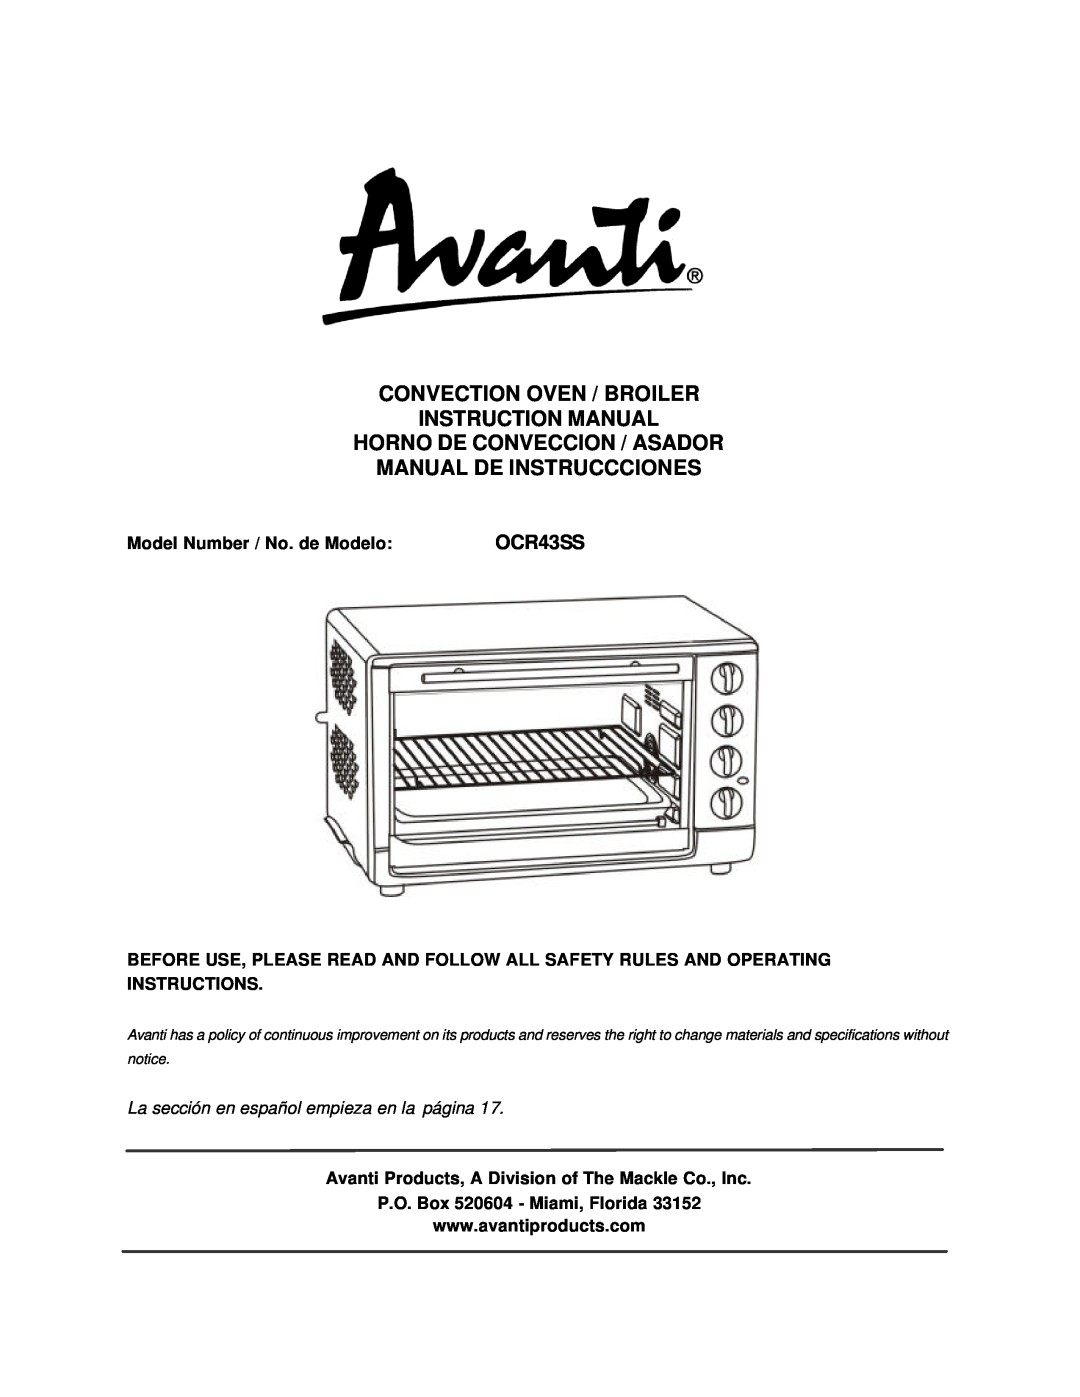 Avanti OCR43SS instruction manual Horno De Conveccion / Asador Manual De Instruccciones, Model Number / No. de Modelo 